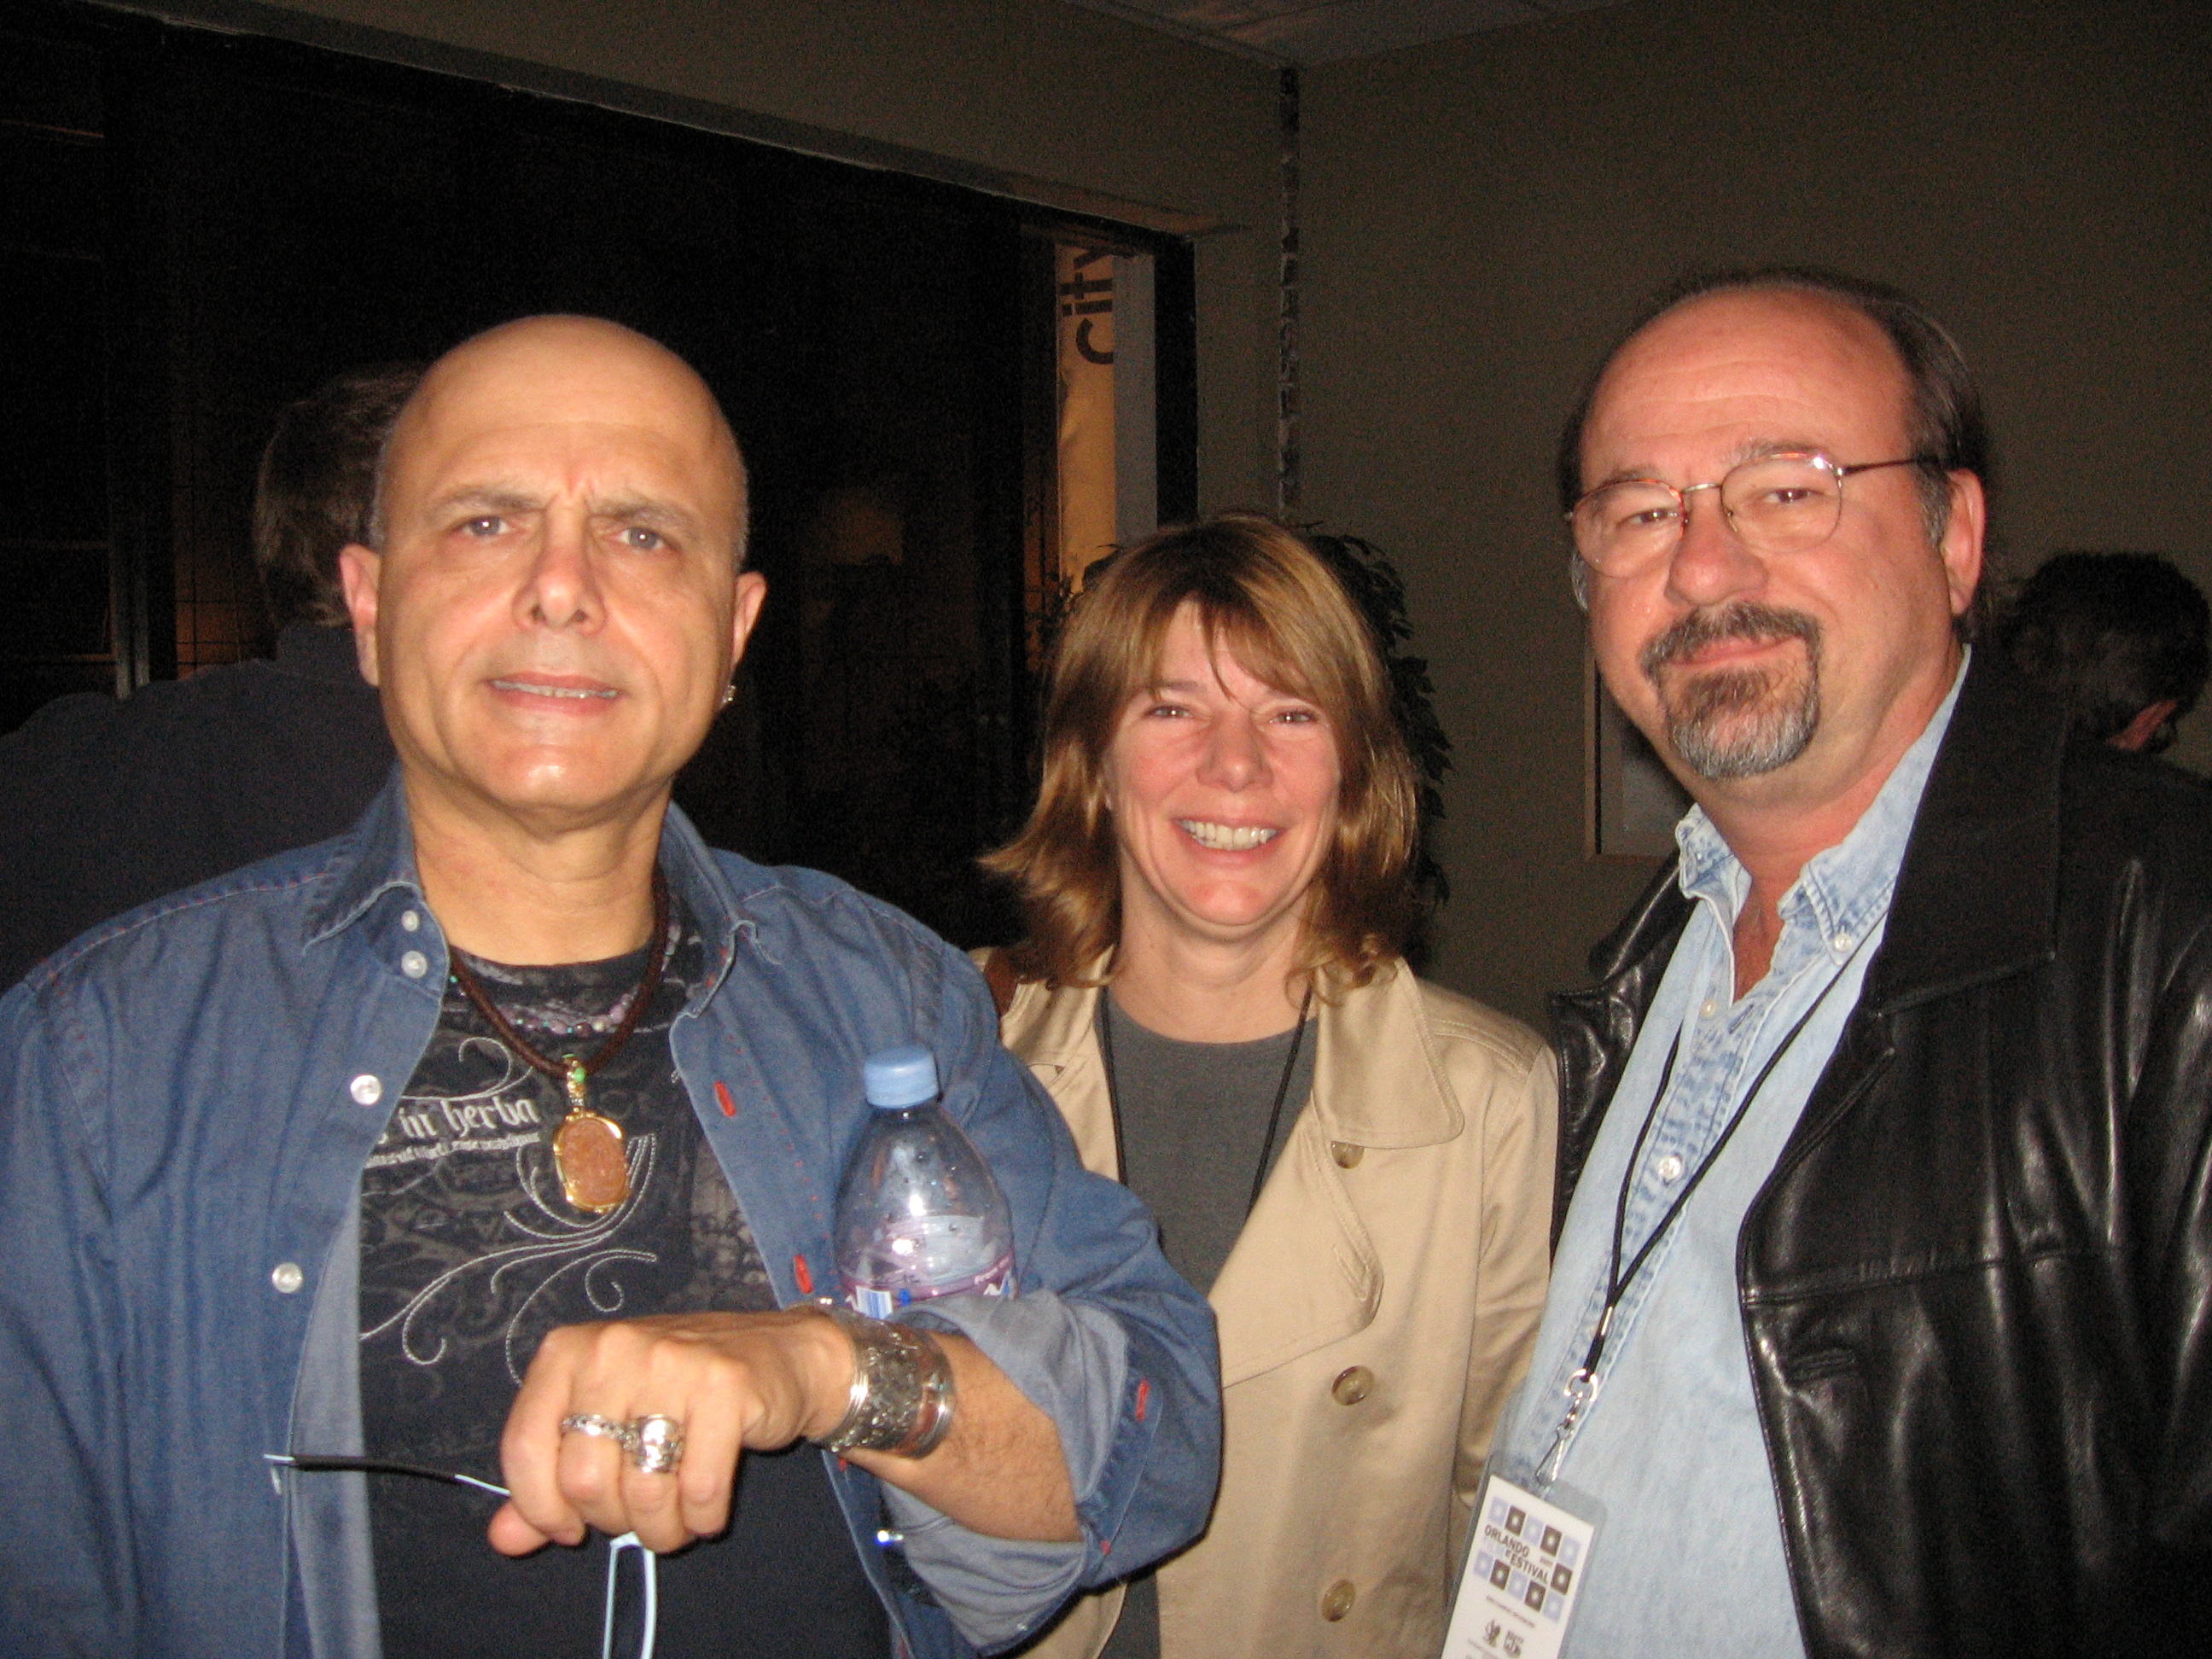 Joey Pants, Producer Melissa Gruver, Randy Molnar